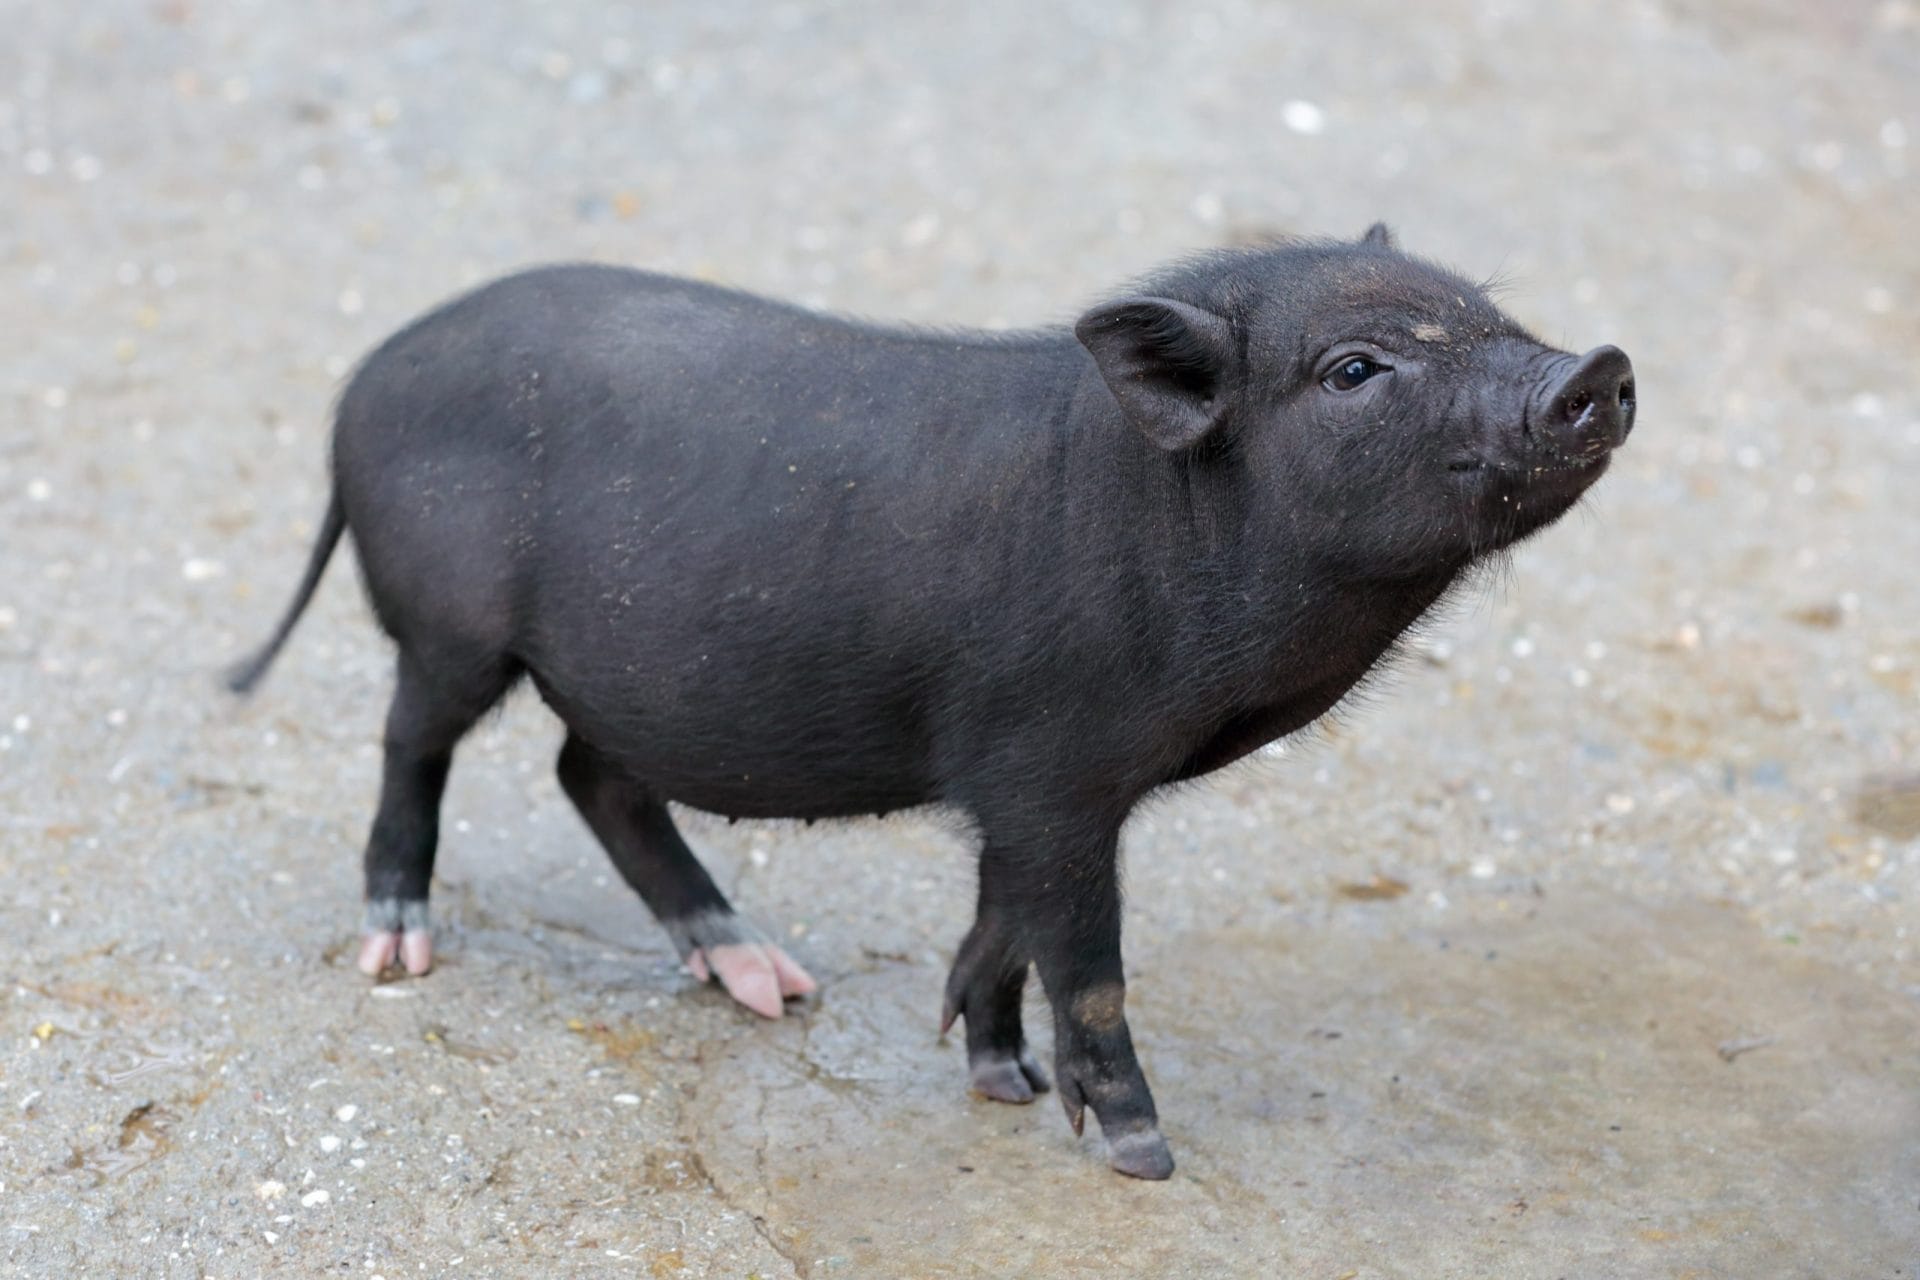 potbelly pig